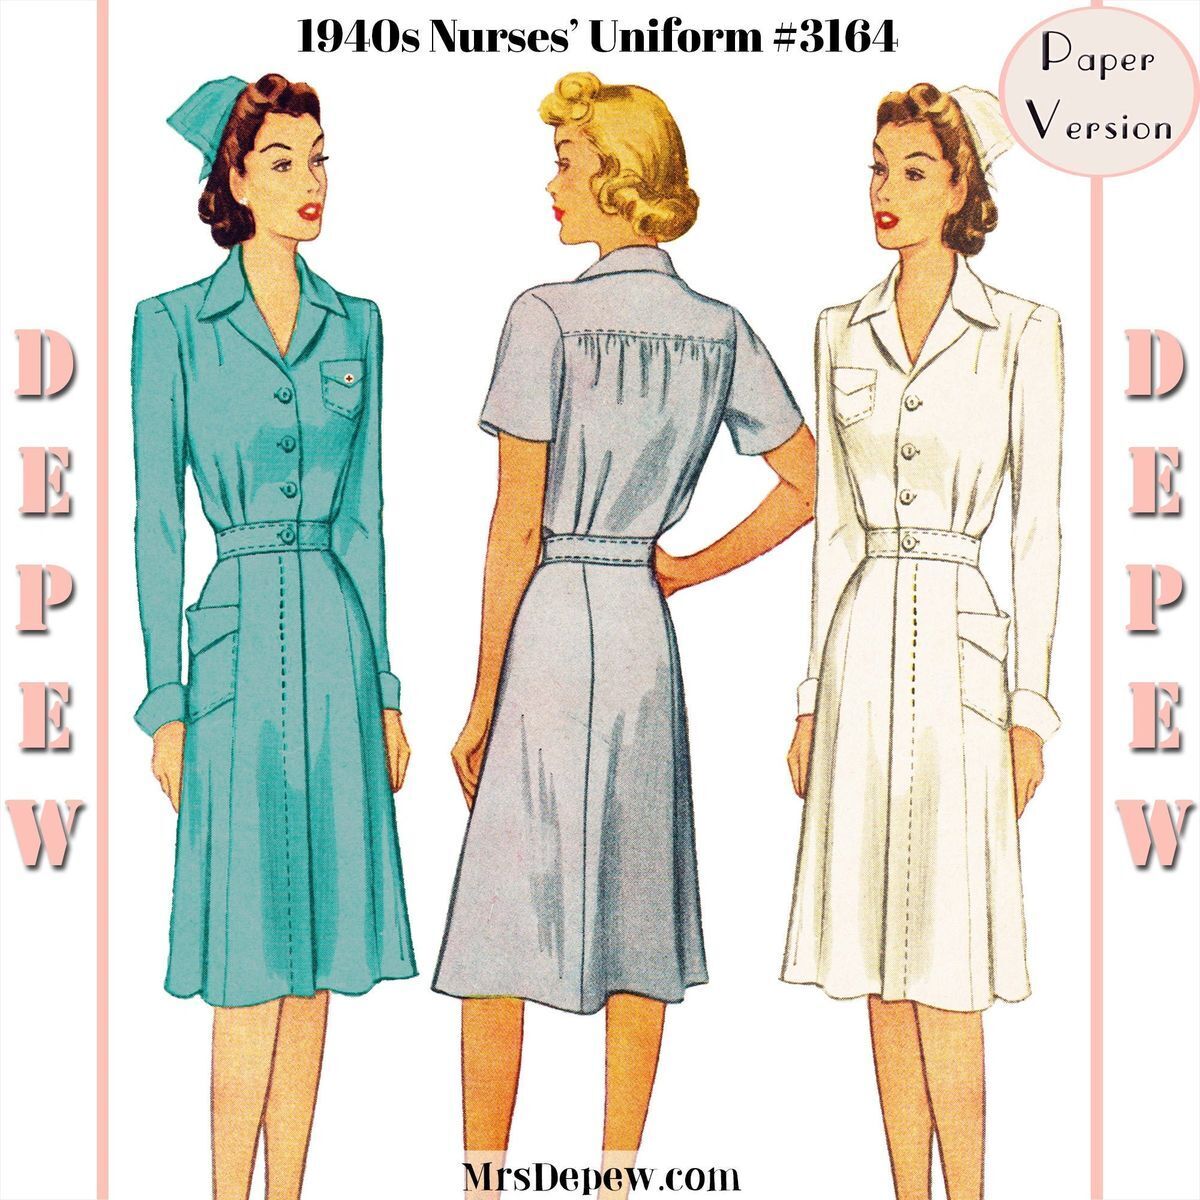 Vintage Sewing Pattern 1940s Nurses' Uniform Shirtwaist Dress #3164 32-46